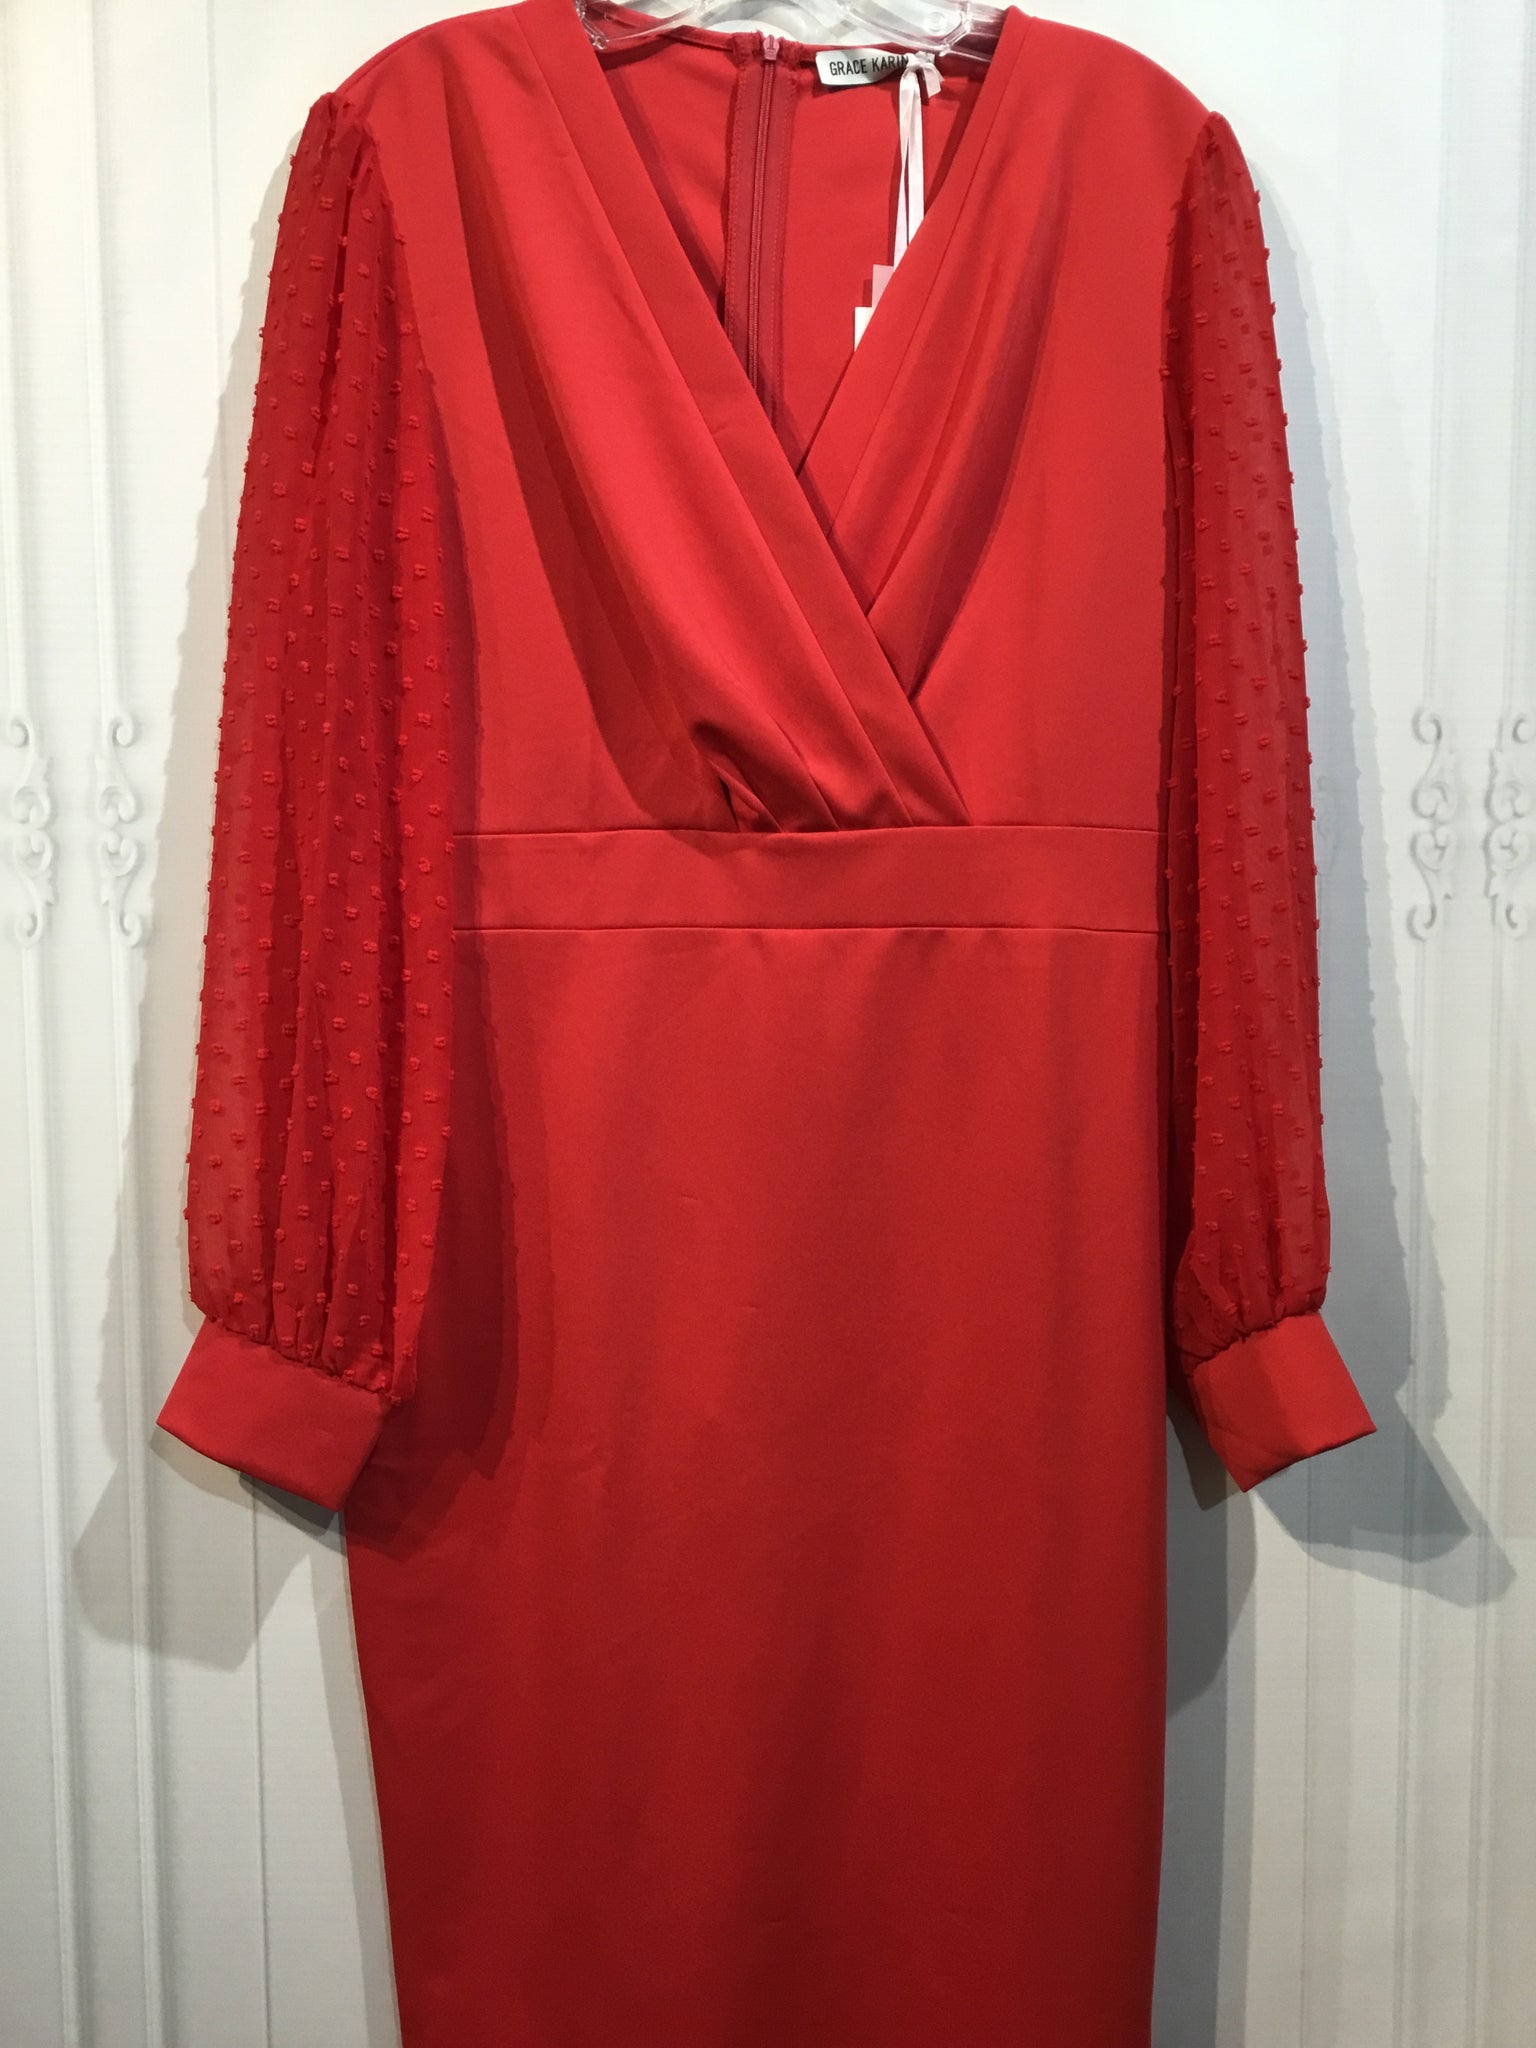 Grace Karin Size L/12-14 Red Dress